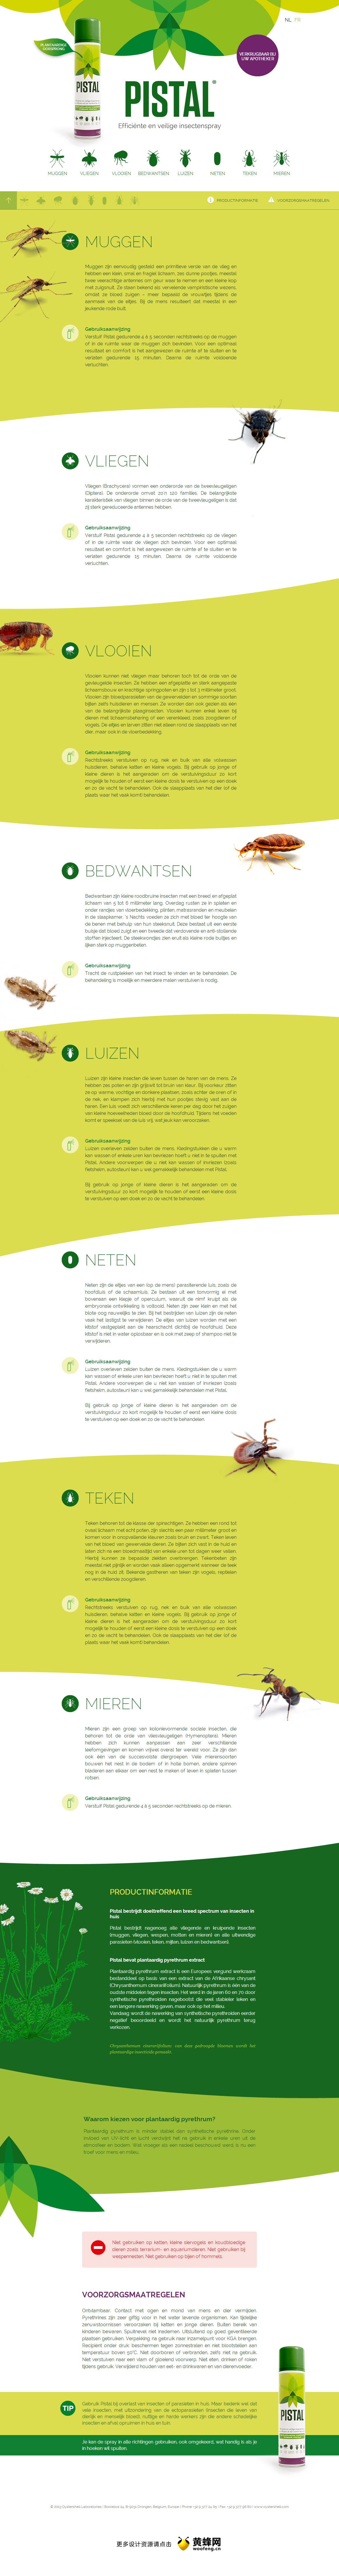 Pistal高效和安全的杀虫剂，来源自黄蜂网https://woofeng.cn/